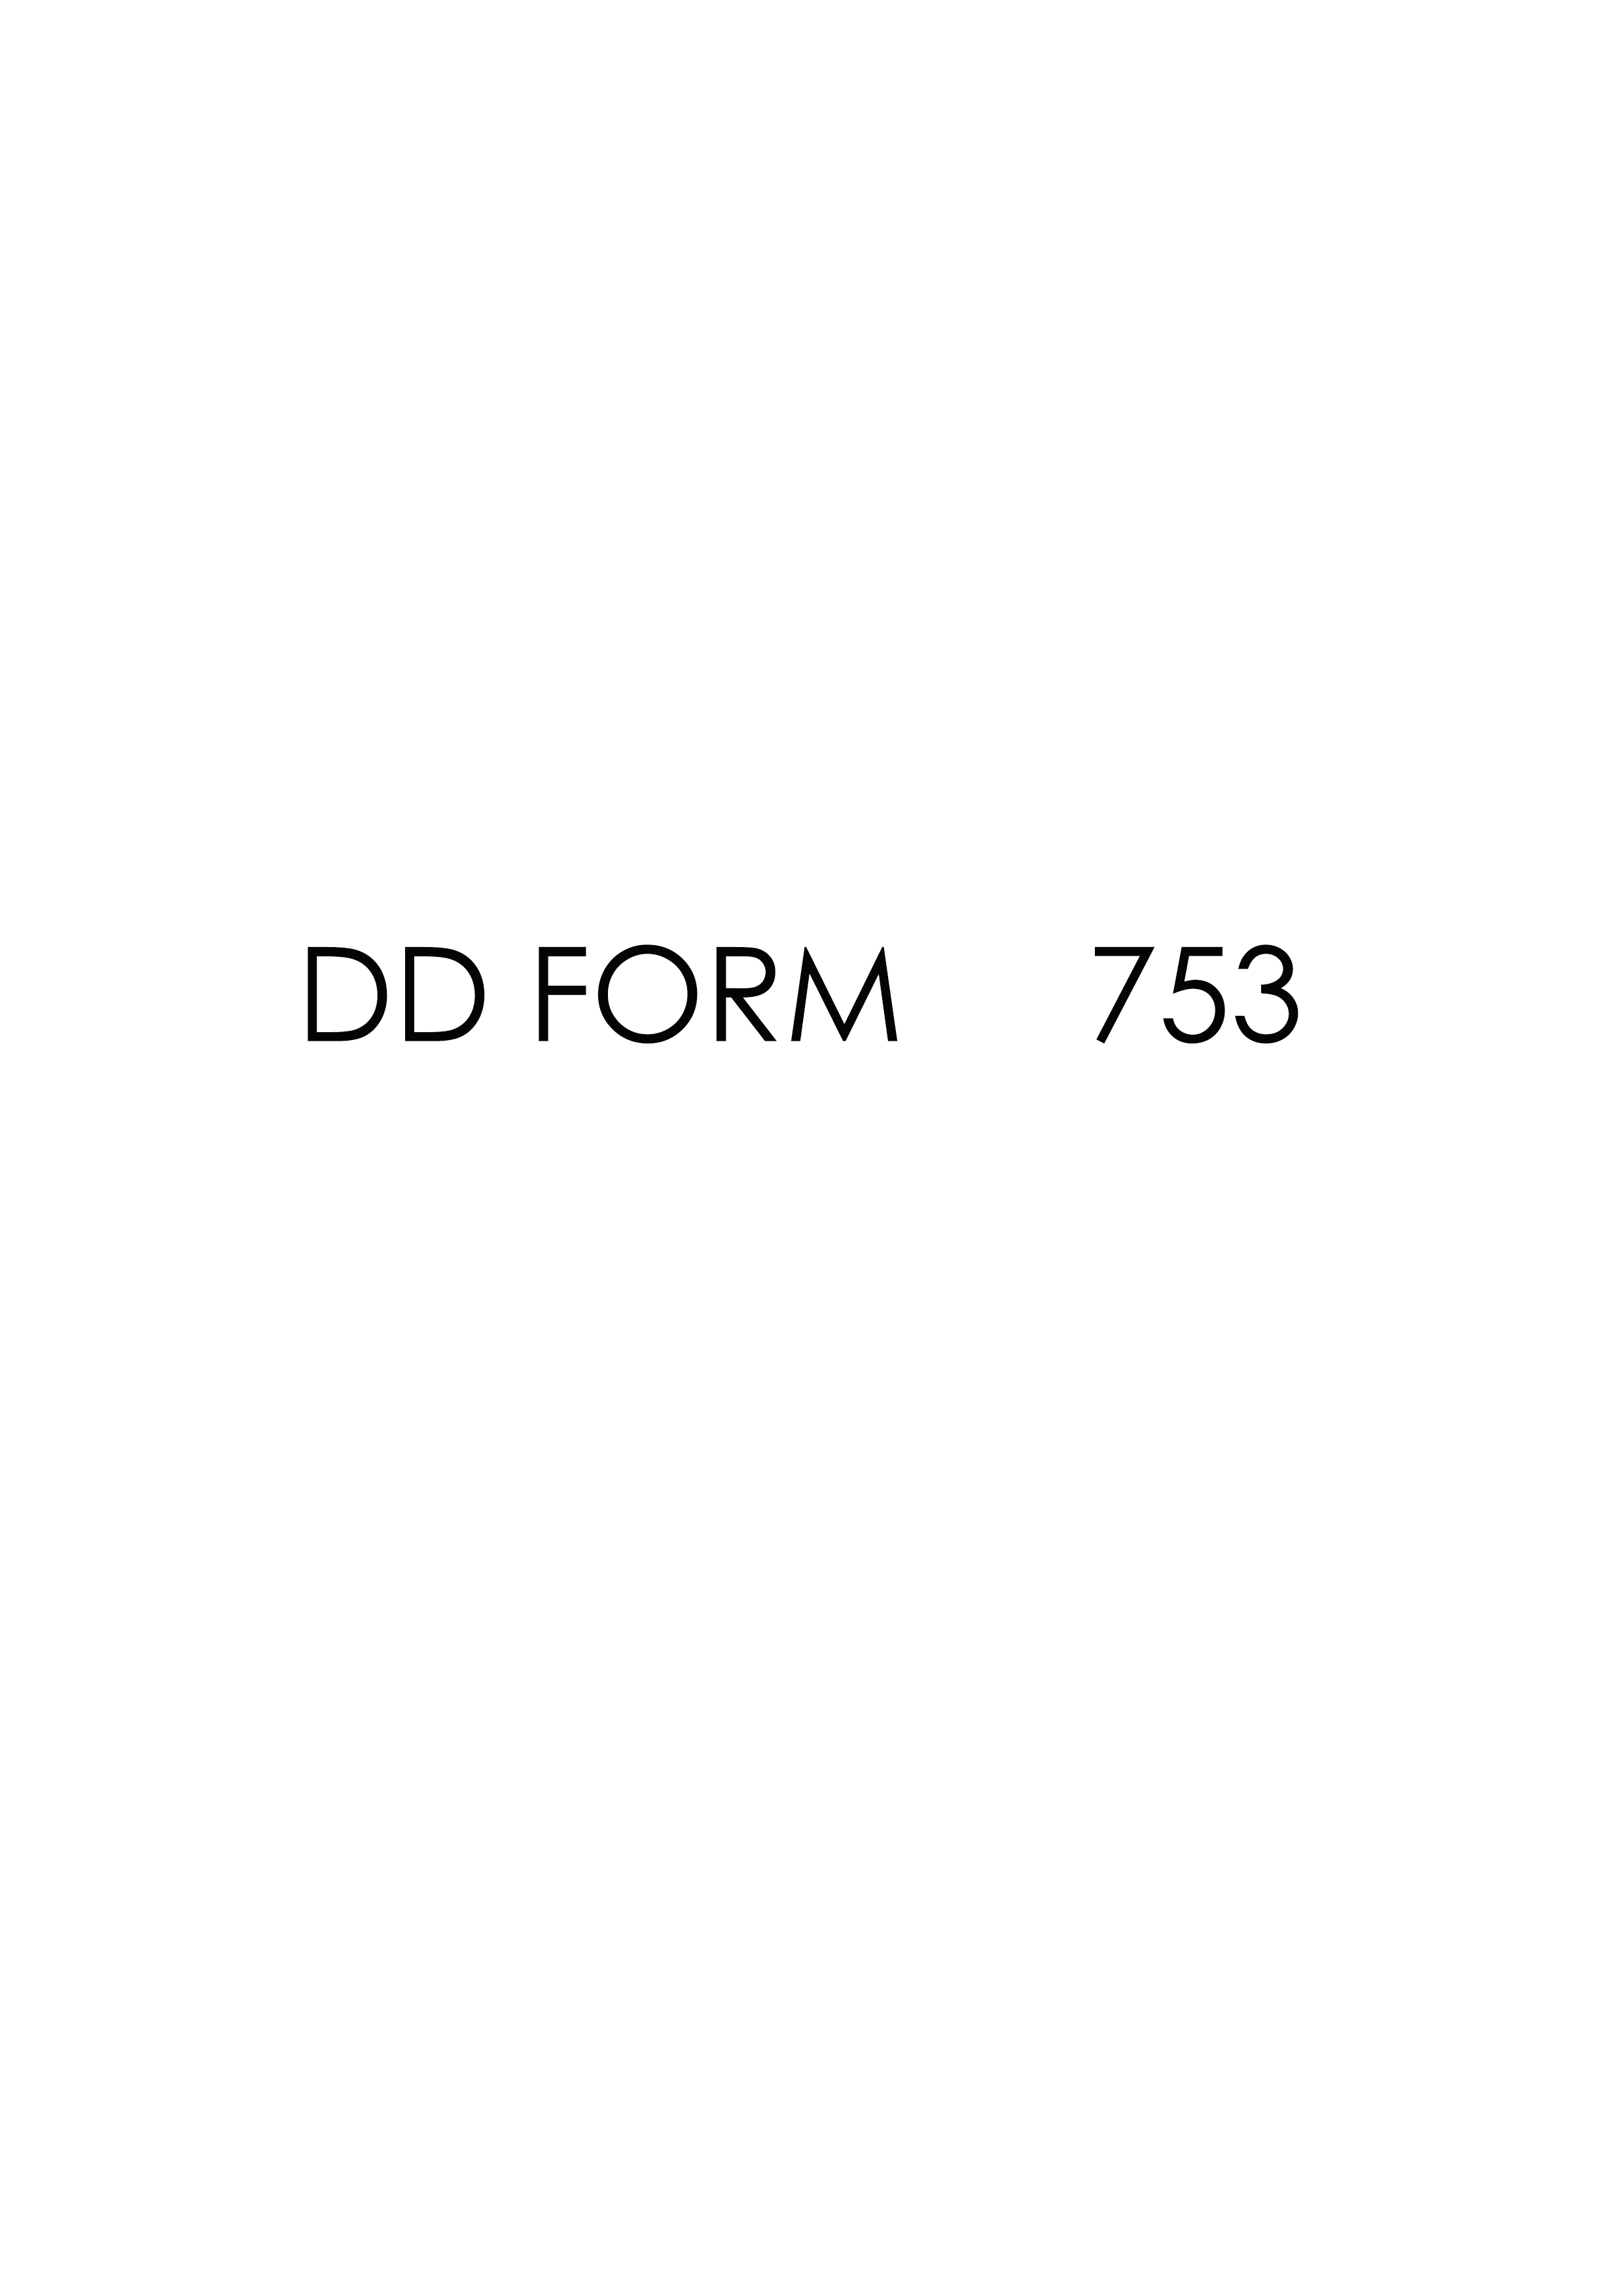 Download dd form 753